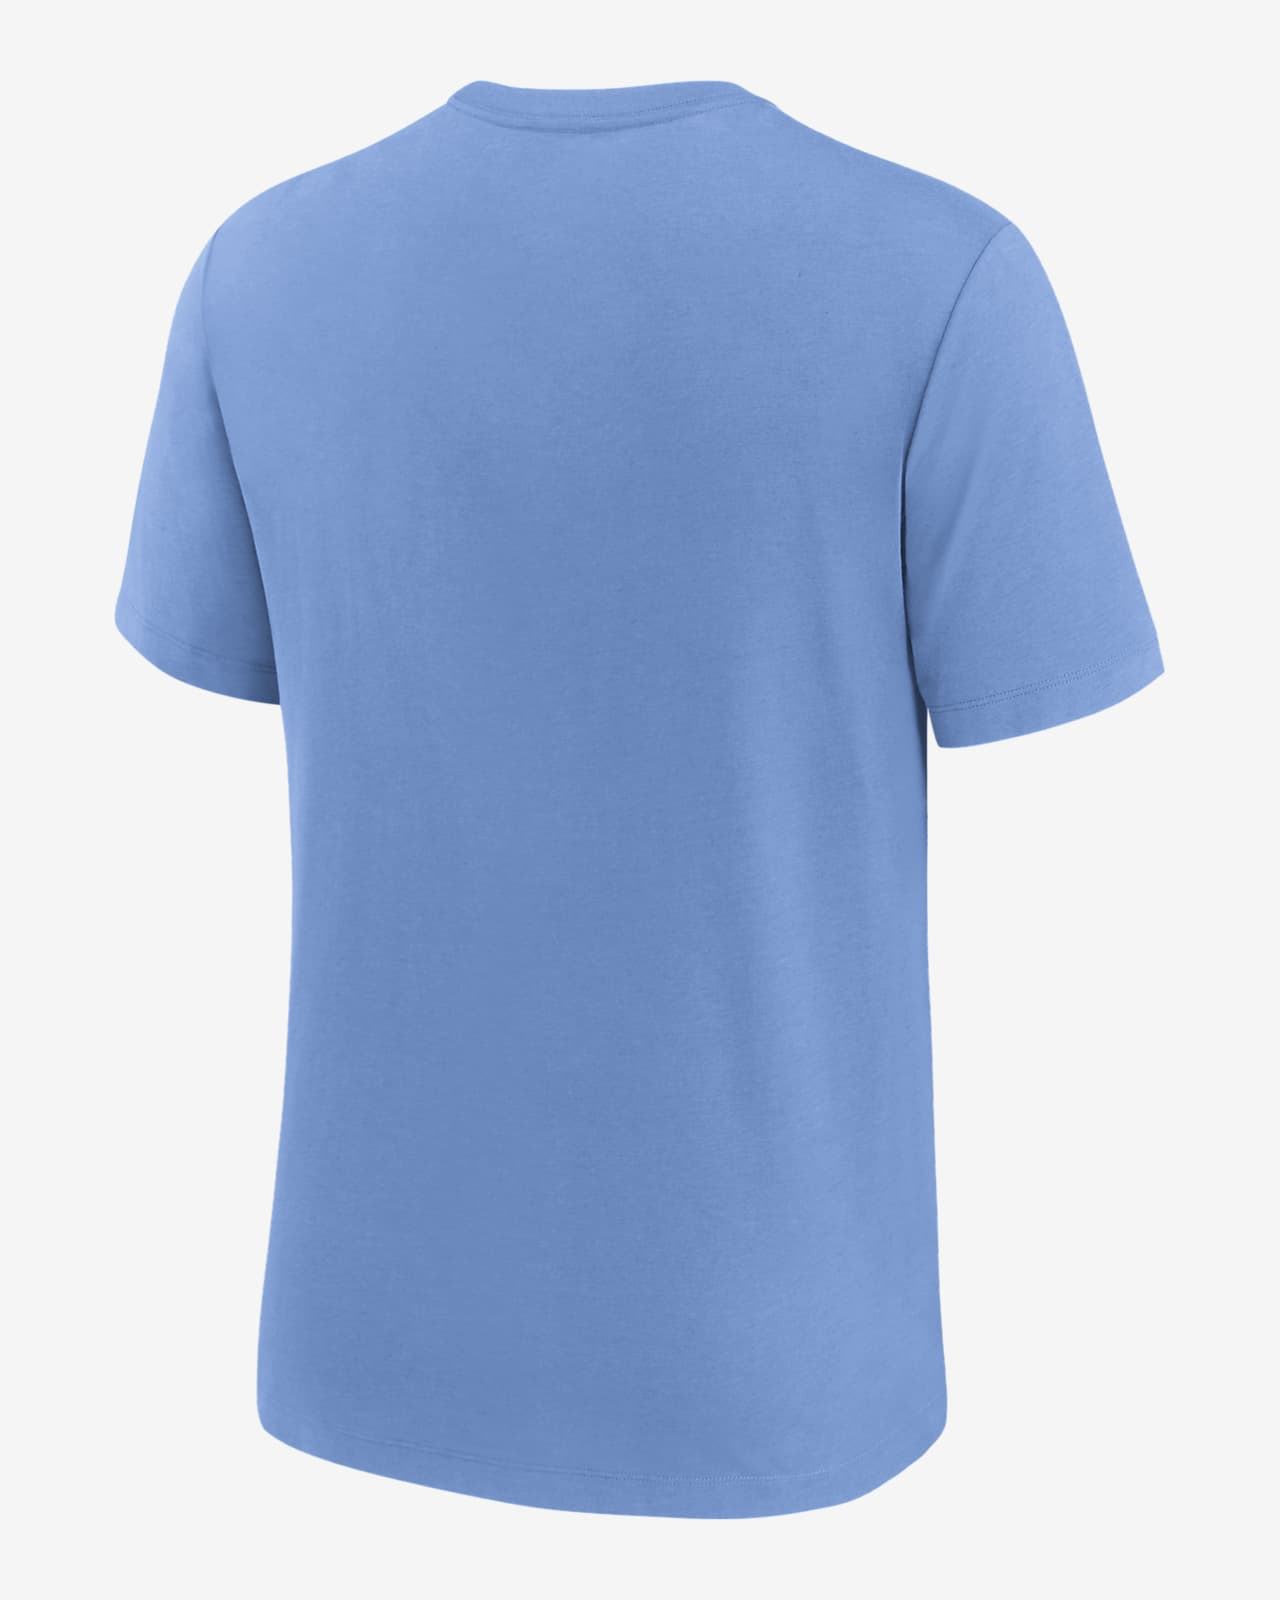 Nike Cooperstown Rewind Review (MLB St. Louis Cardinals) Men's T-Shirt.